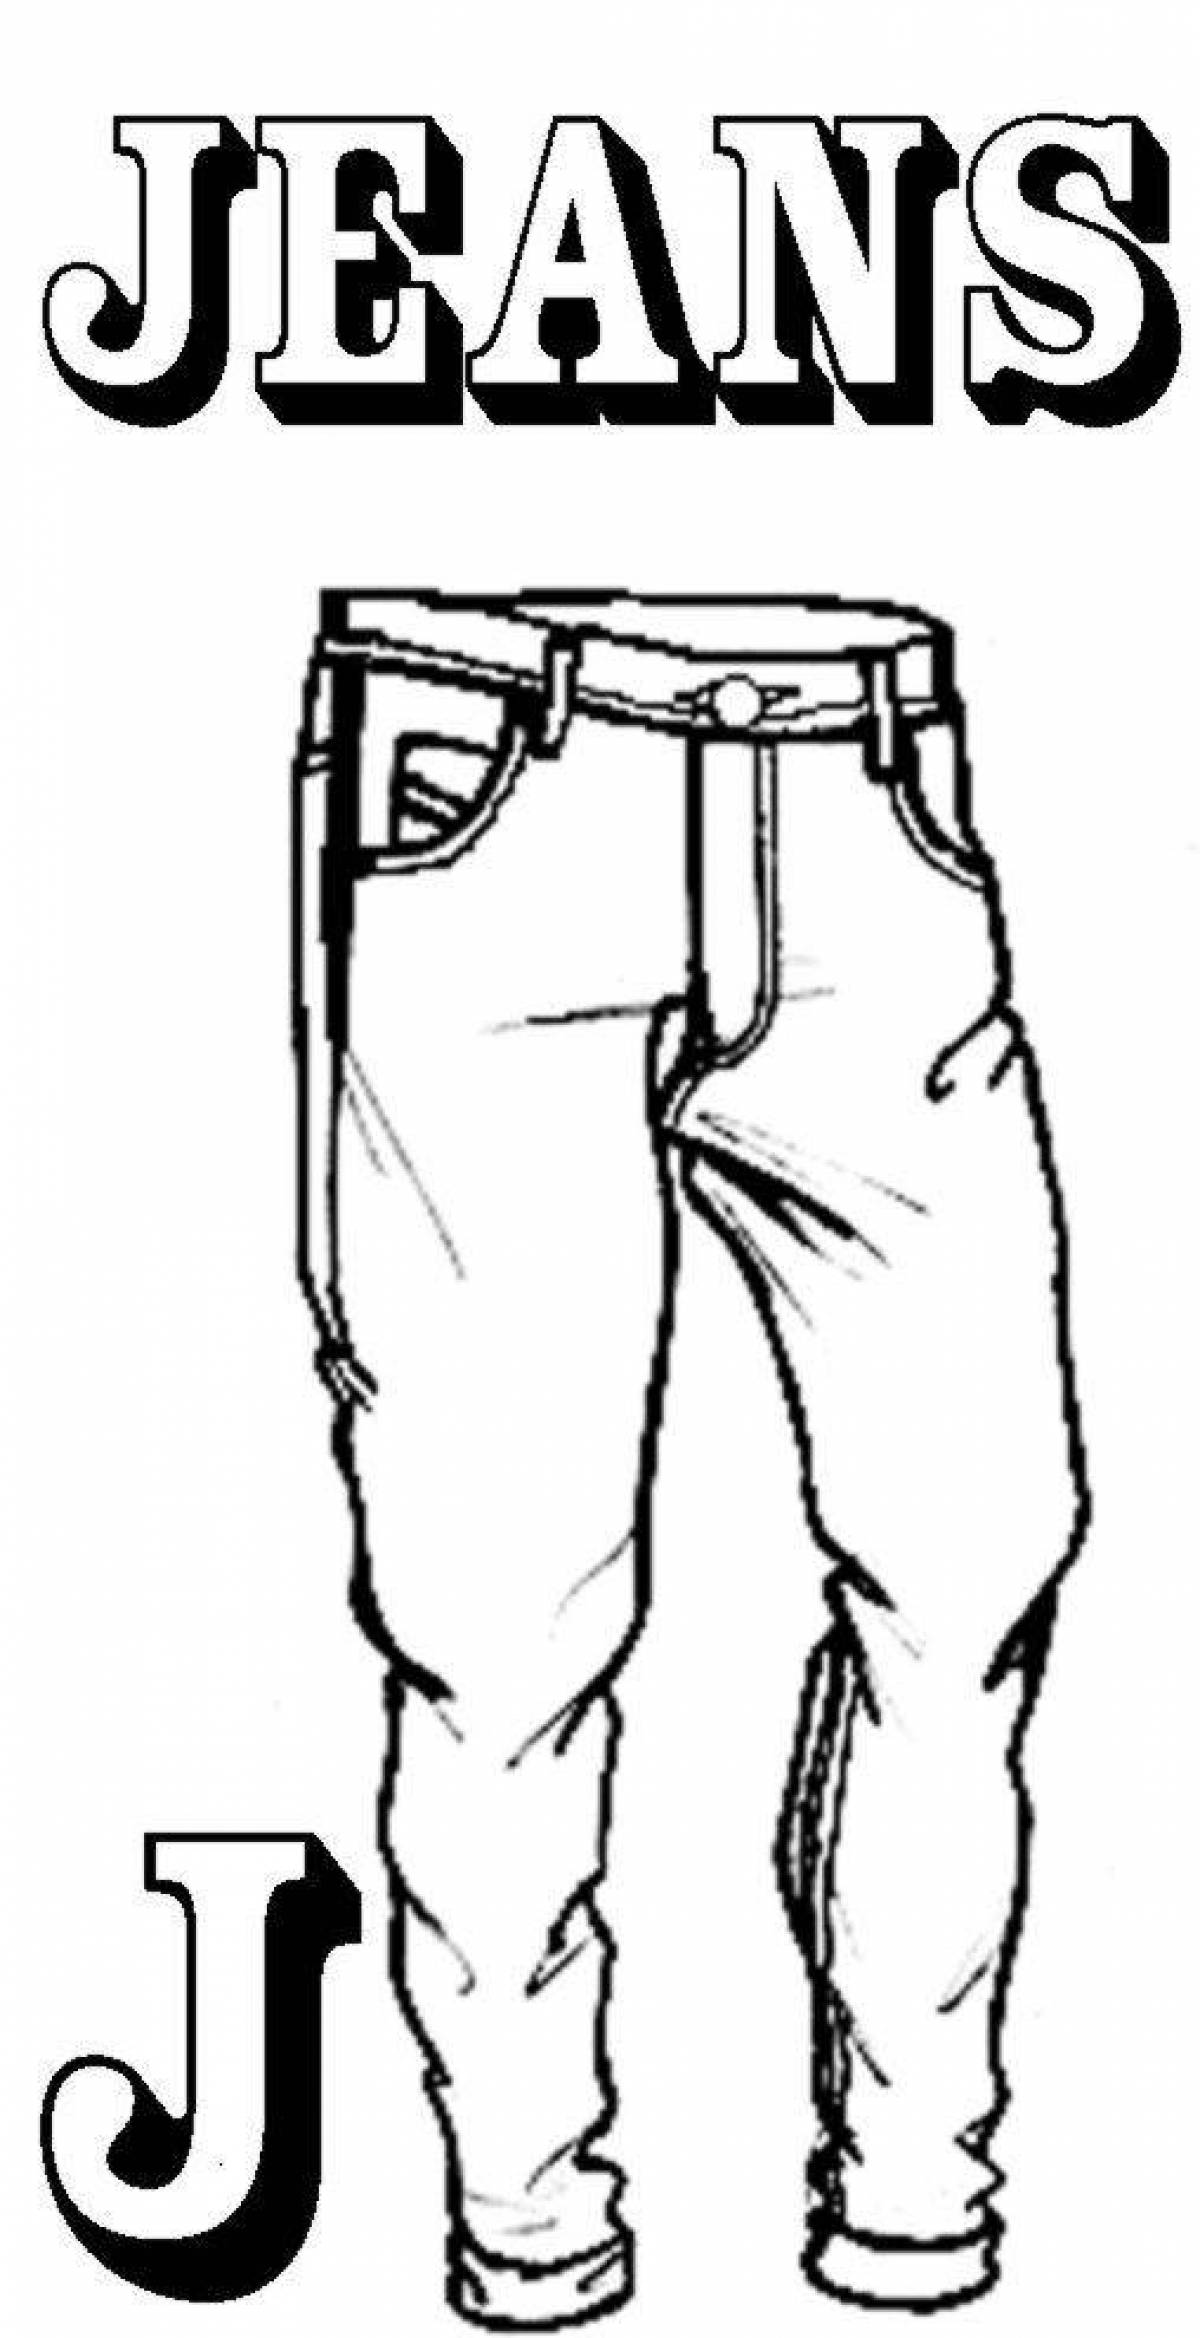 Рисунки на джинсах